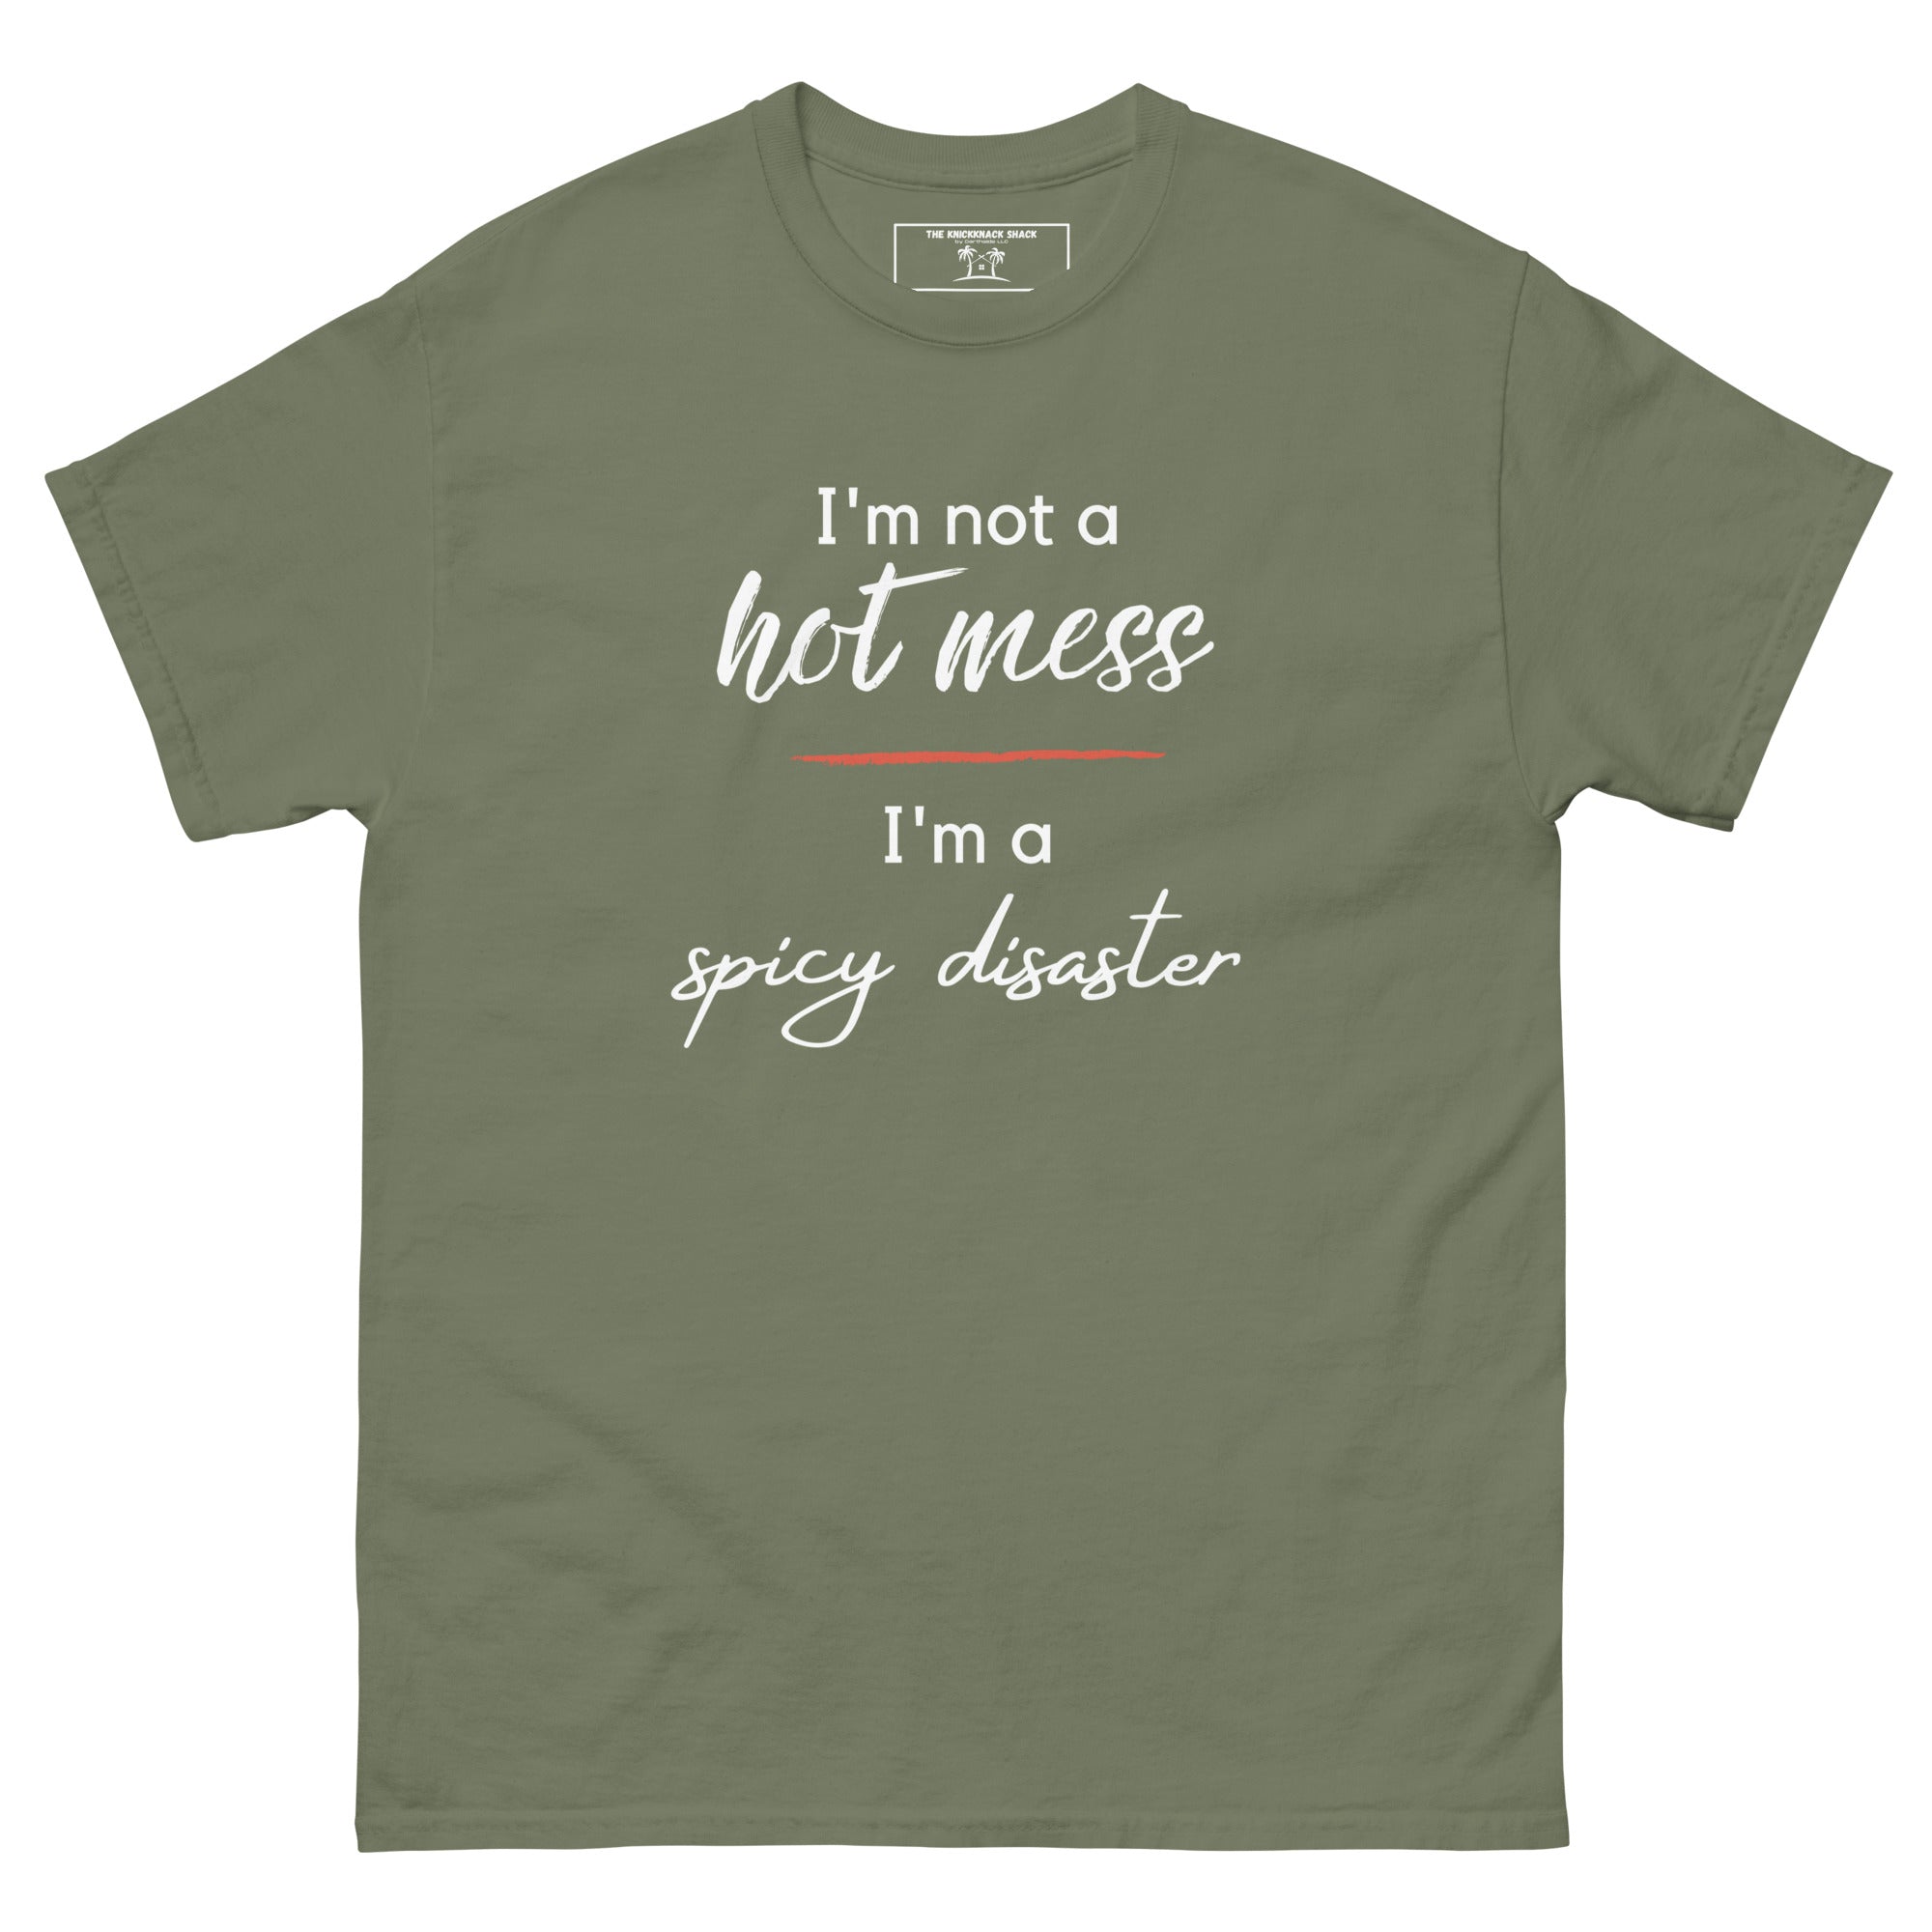 Tee-shirt classique - Hot Mess (couleurs sombres)